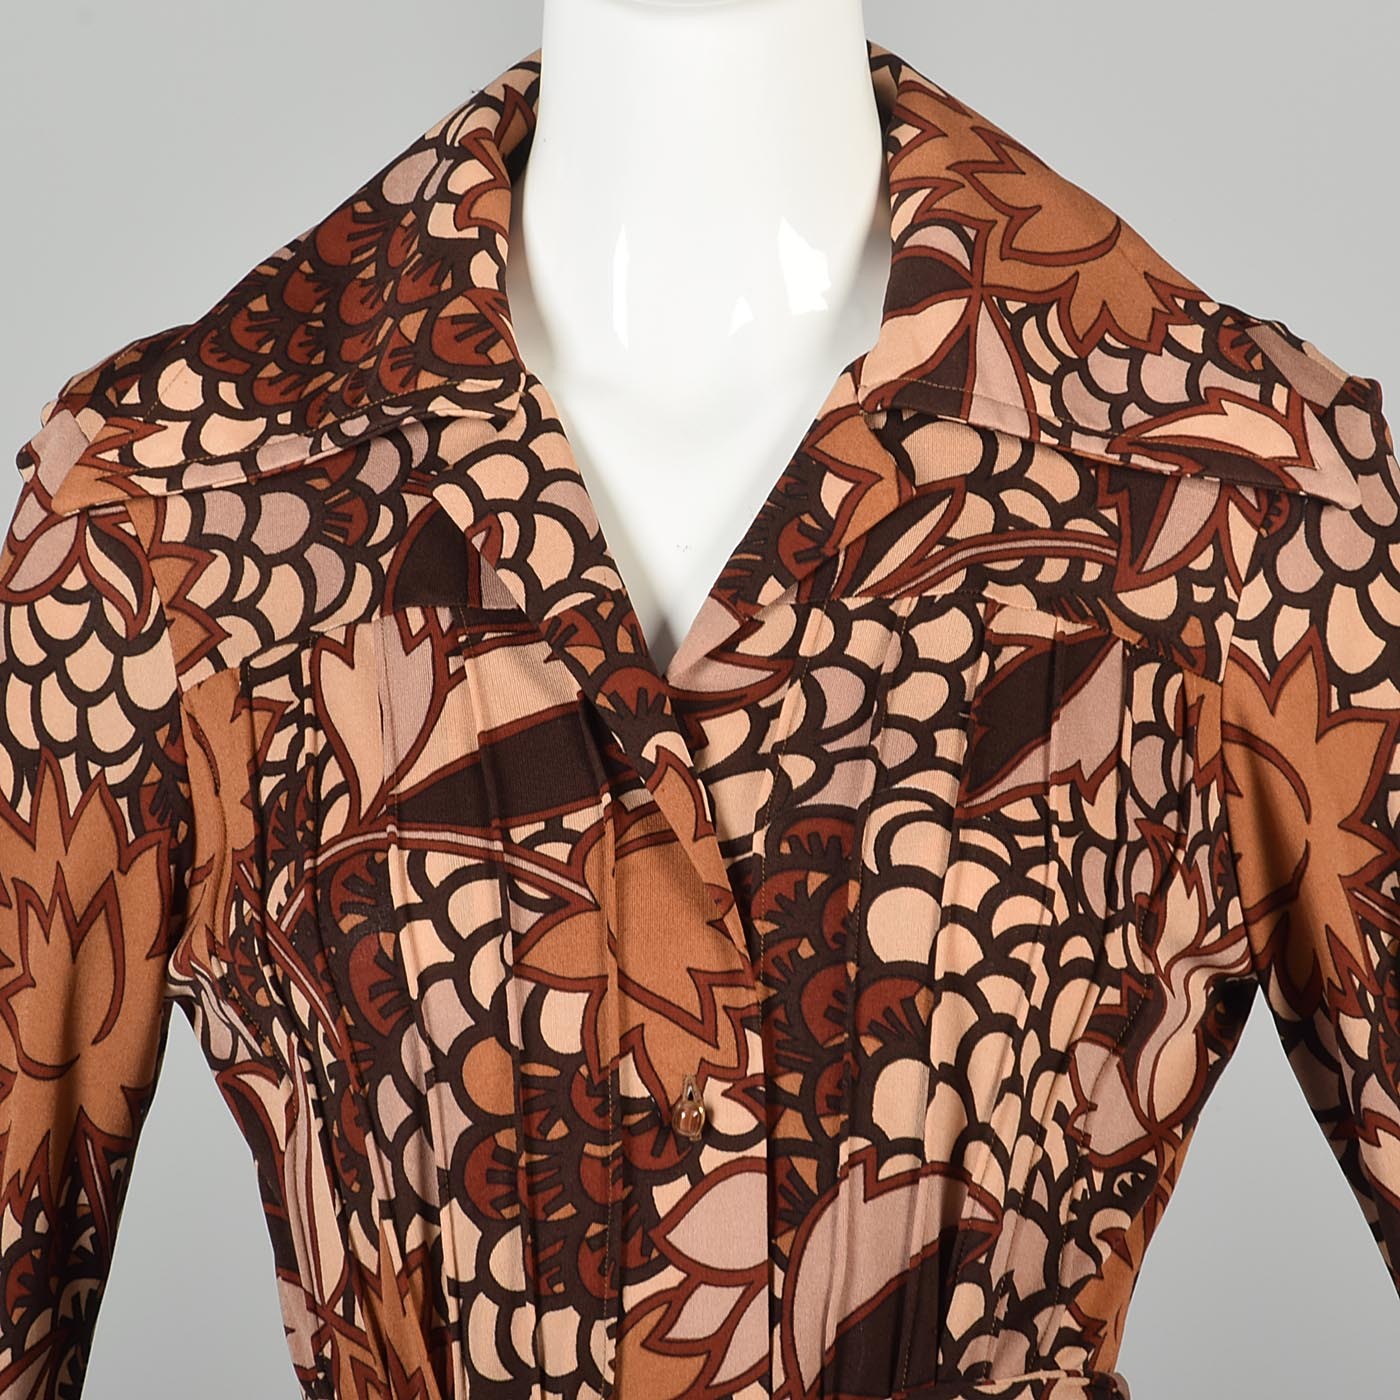 1970s La Mendola Bohemian Silk Jersey Dress in an Autumn Leaf Print